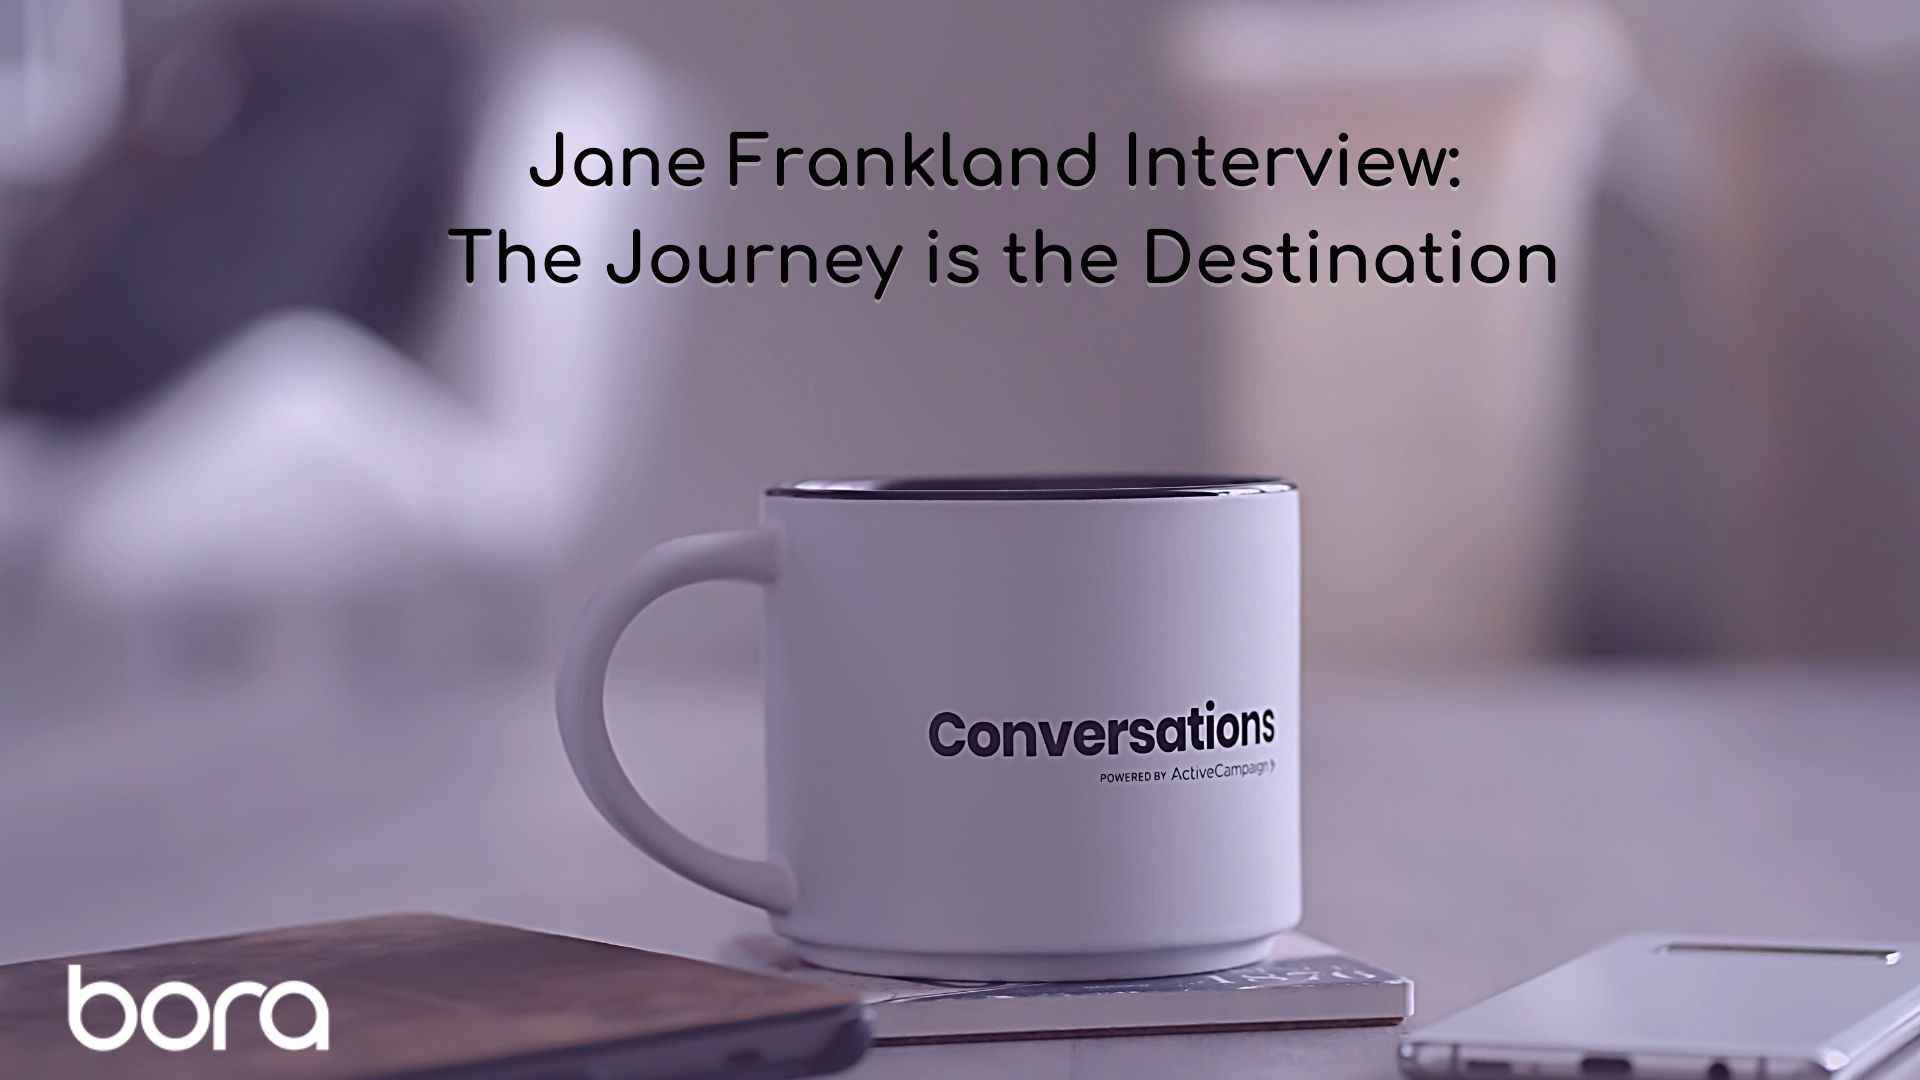 Jane Frankland: The Journey is the Destination